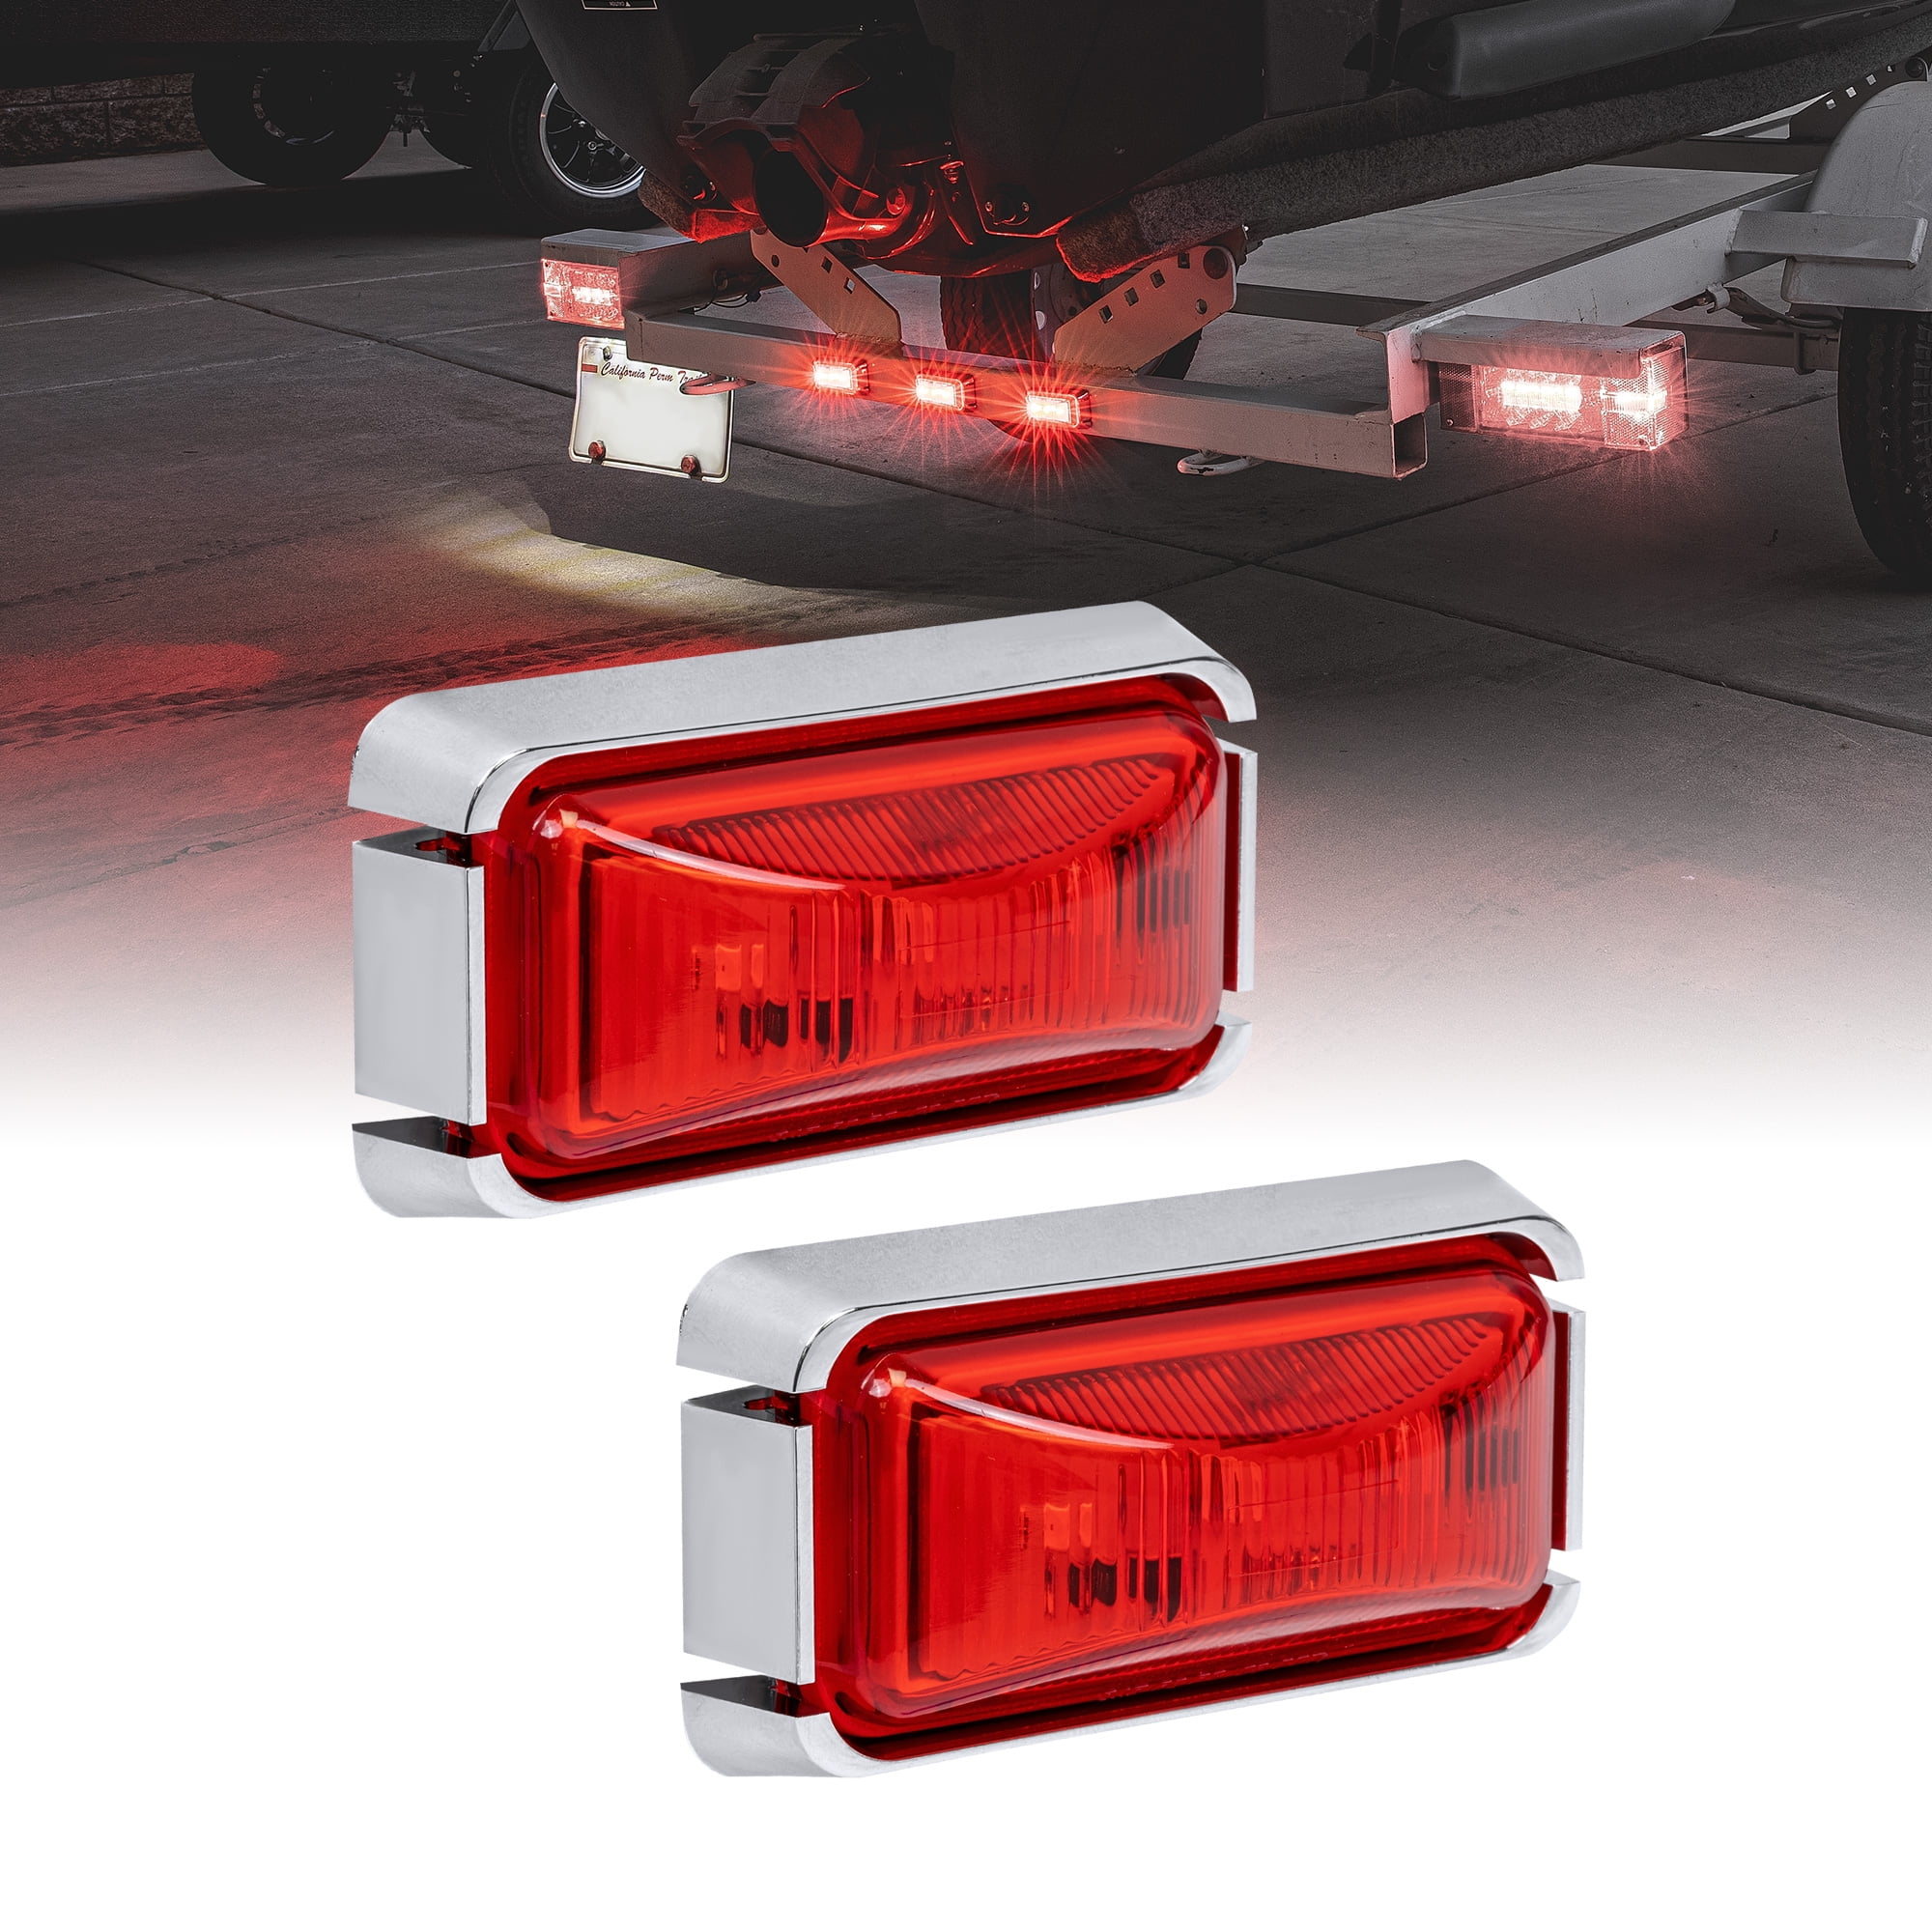 SAE P2PC 2pc 2.5 Red LED Trailer Marker Light w/Chrome Bezel Waterproof IP67 Side Marker Lights for Trailer Truck Surface Mount DOT FMVSS 108 